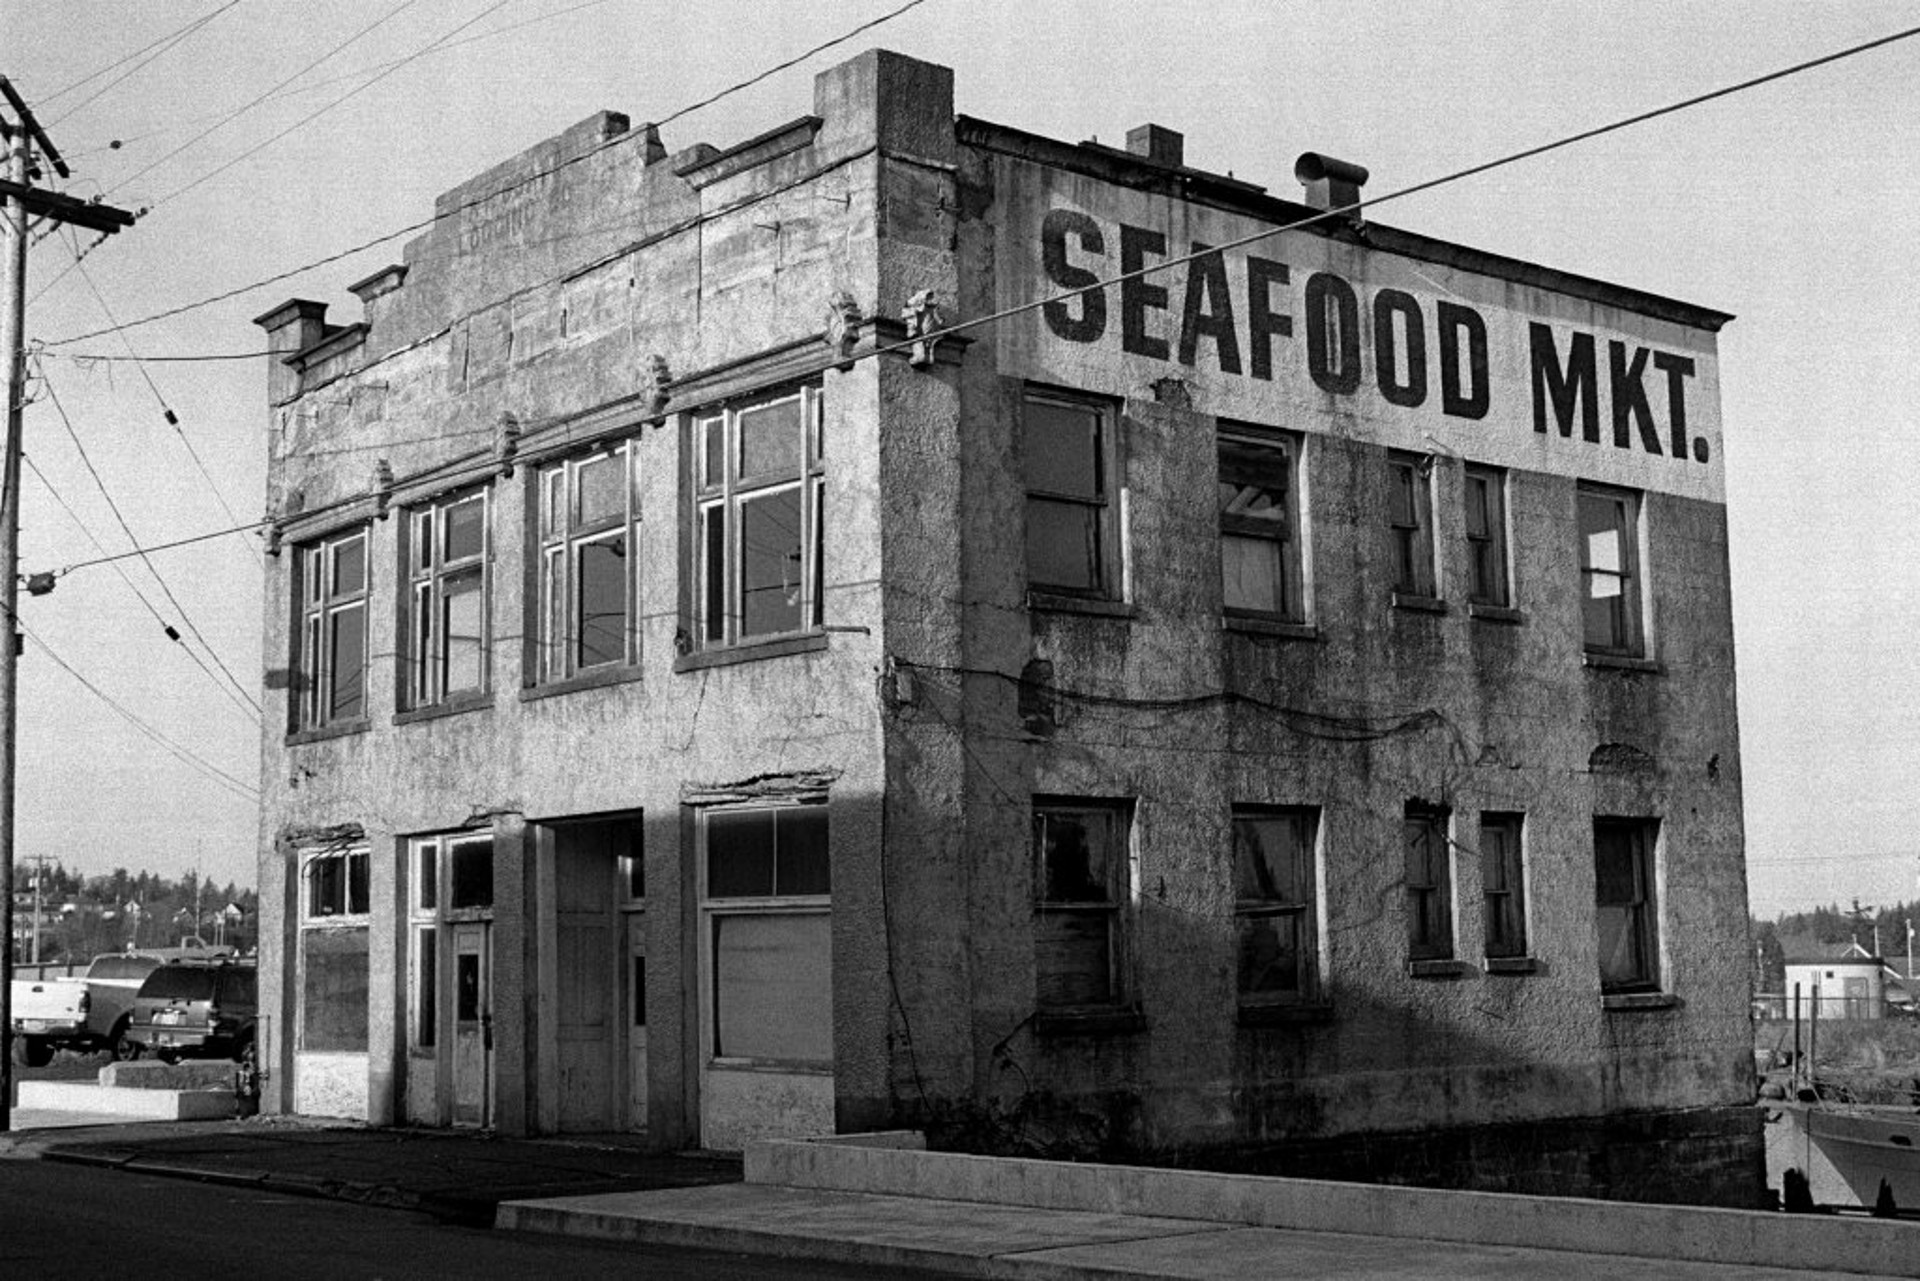 Old Breakwater Seafood Building by Shelli Hyrkas